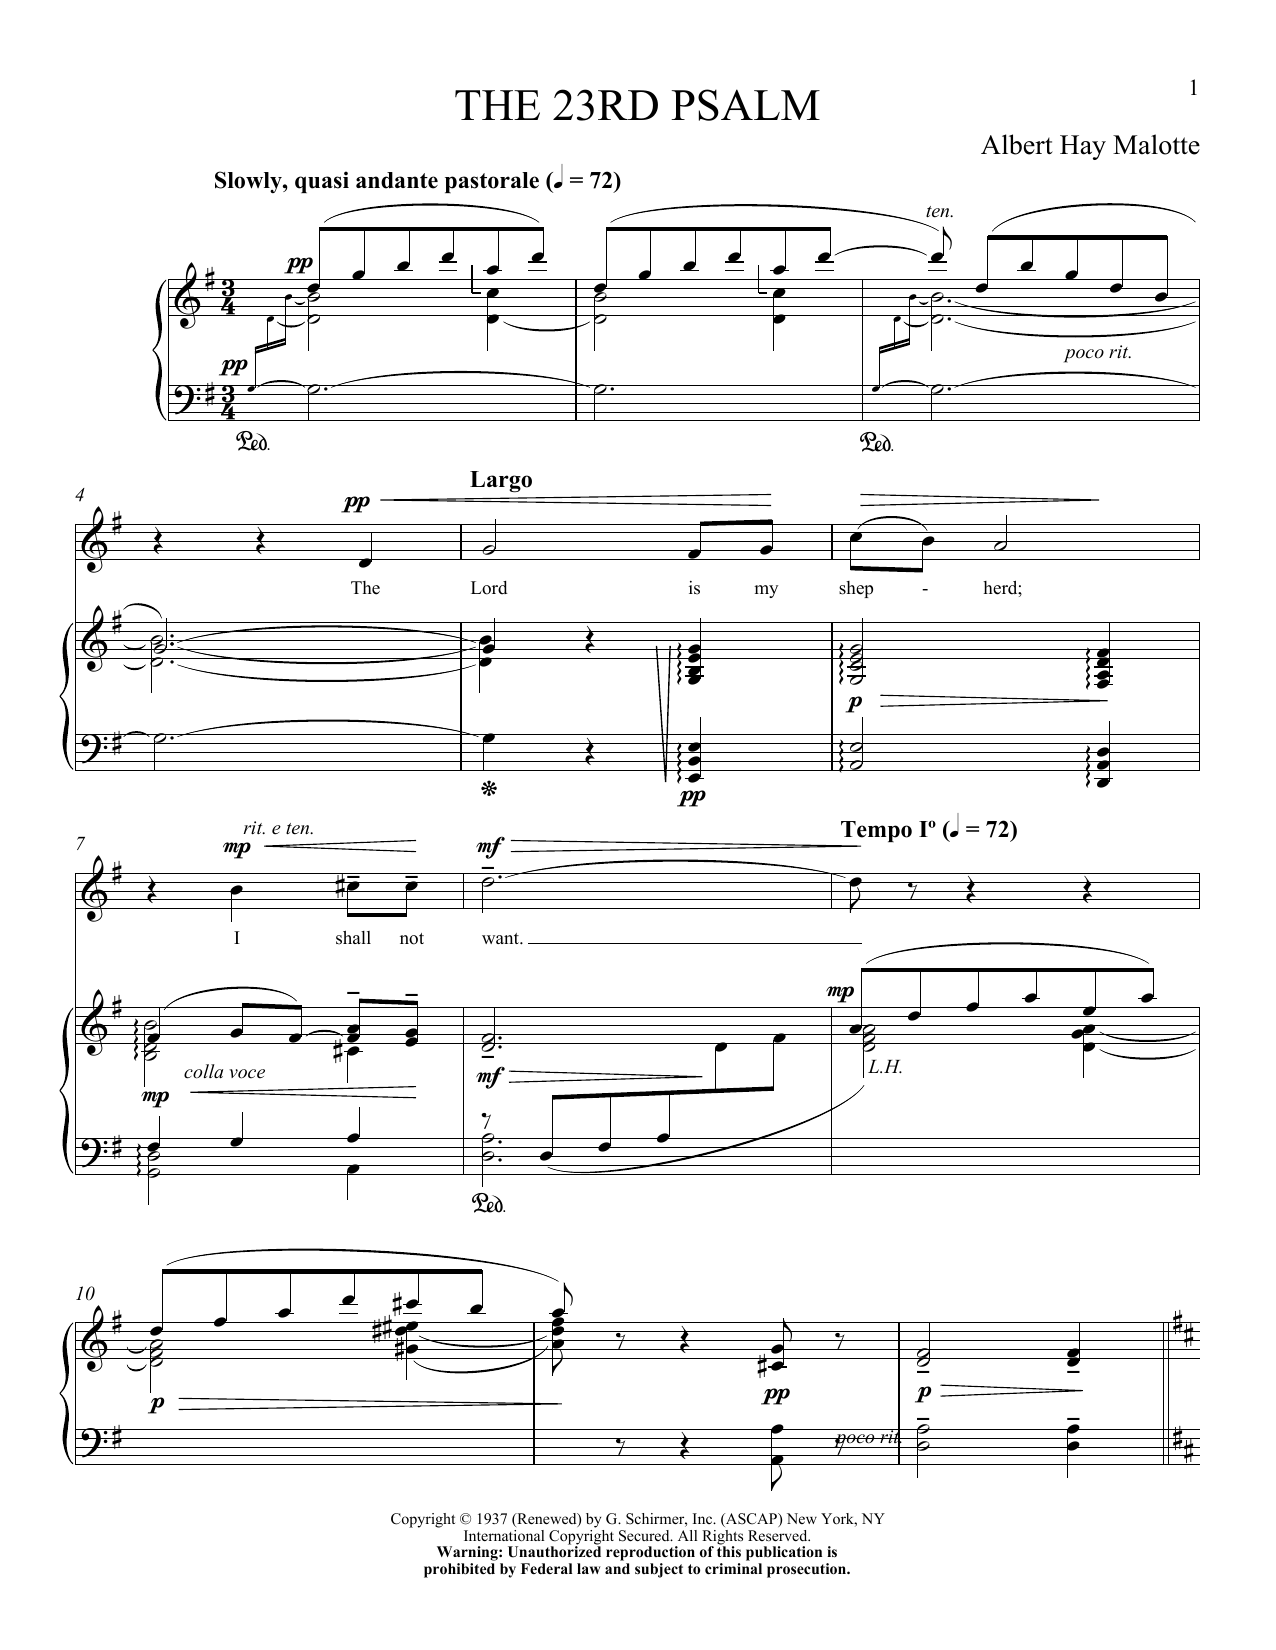 Download Albert H. Malotte The 23rd Psalm Sheet Music